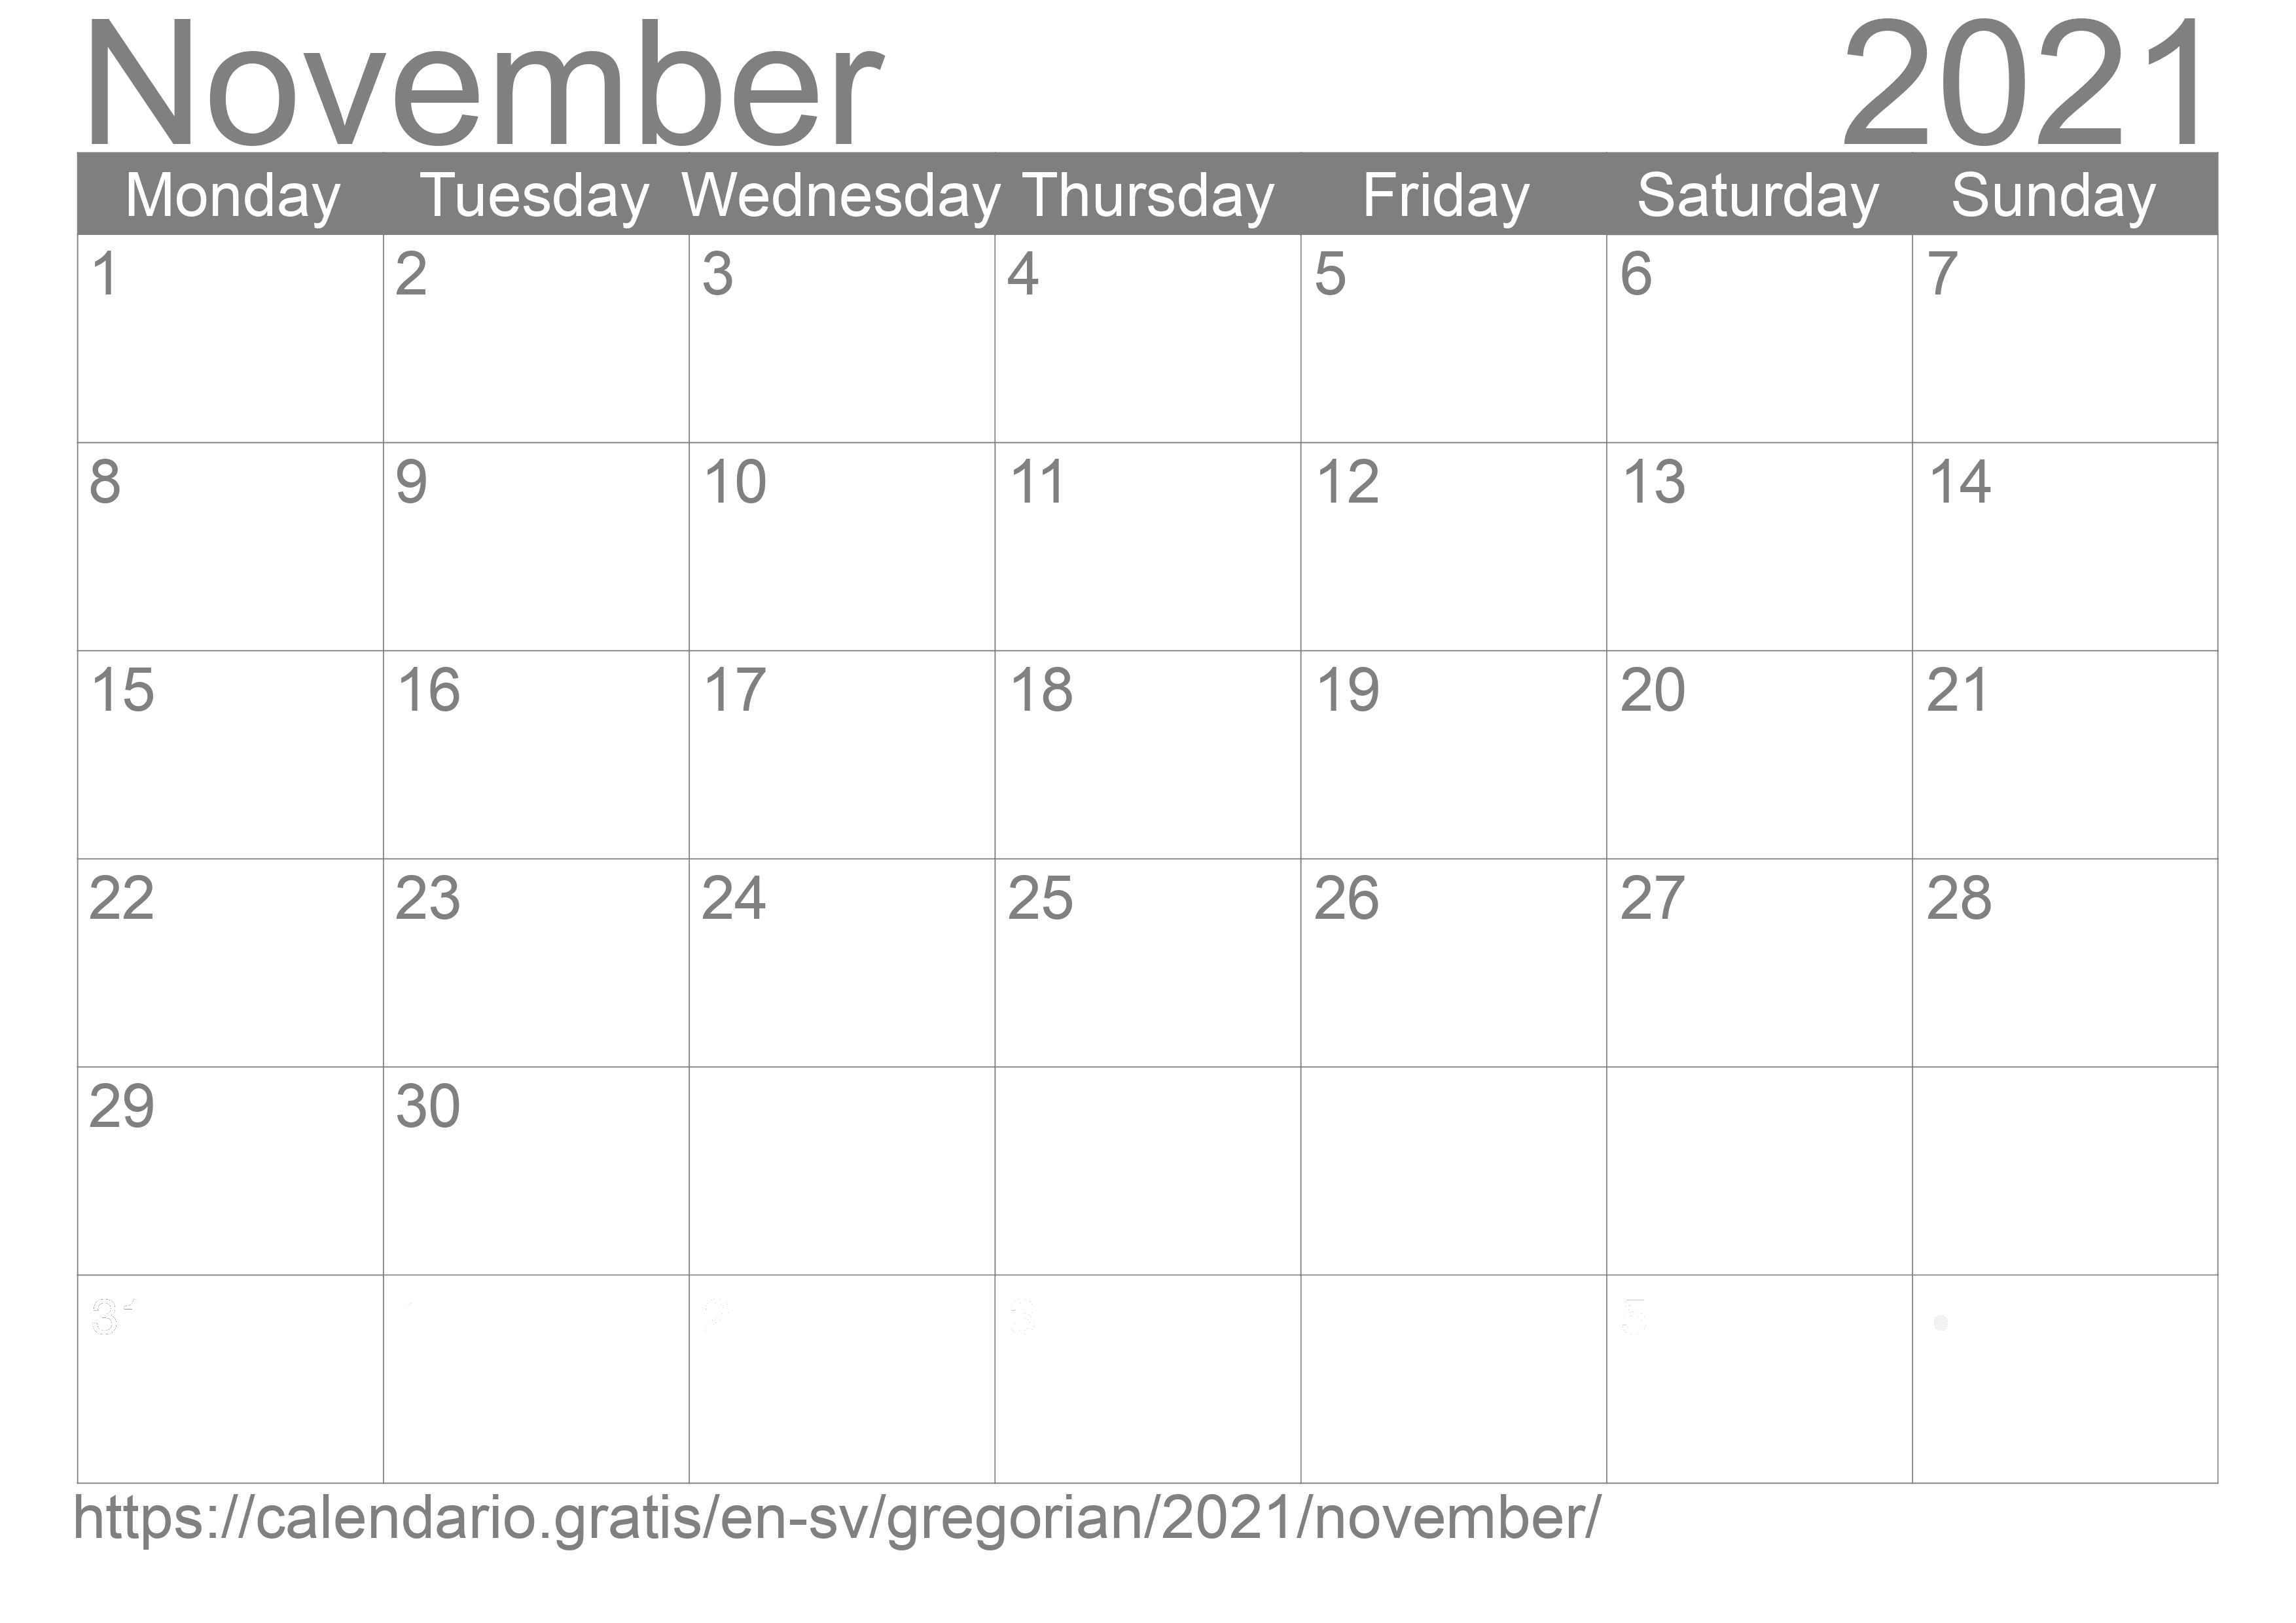 Calendar November 2021 to print